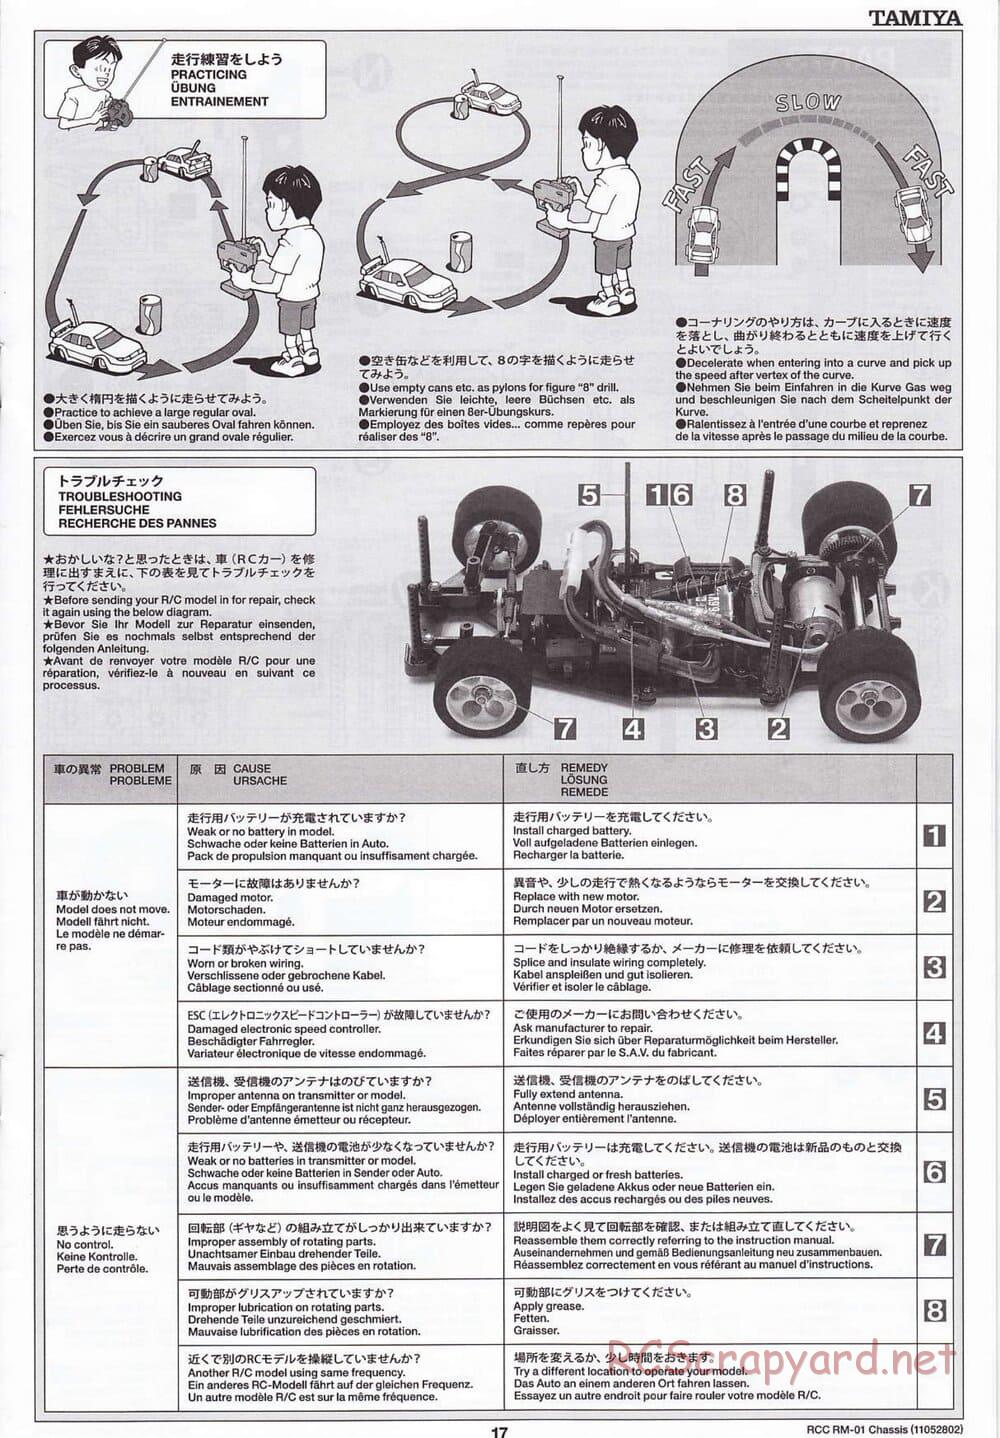 Tamiya - RM-01 Chassis - Manual - Page 17